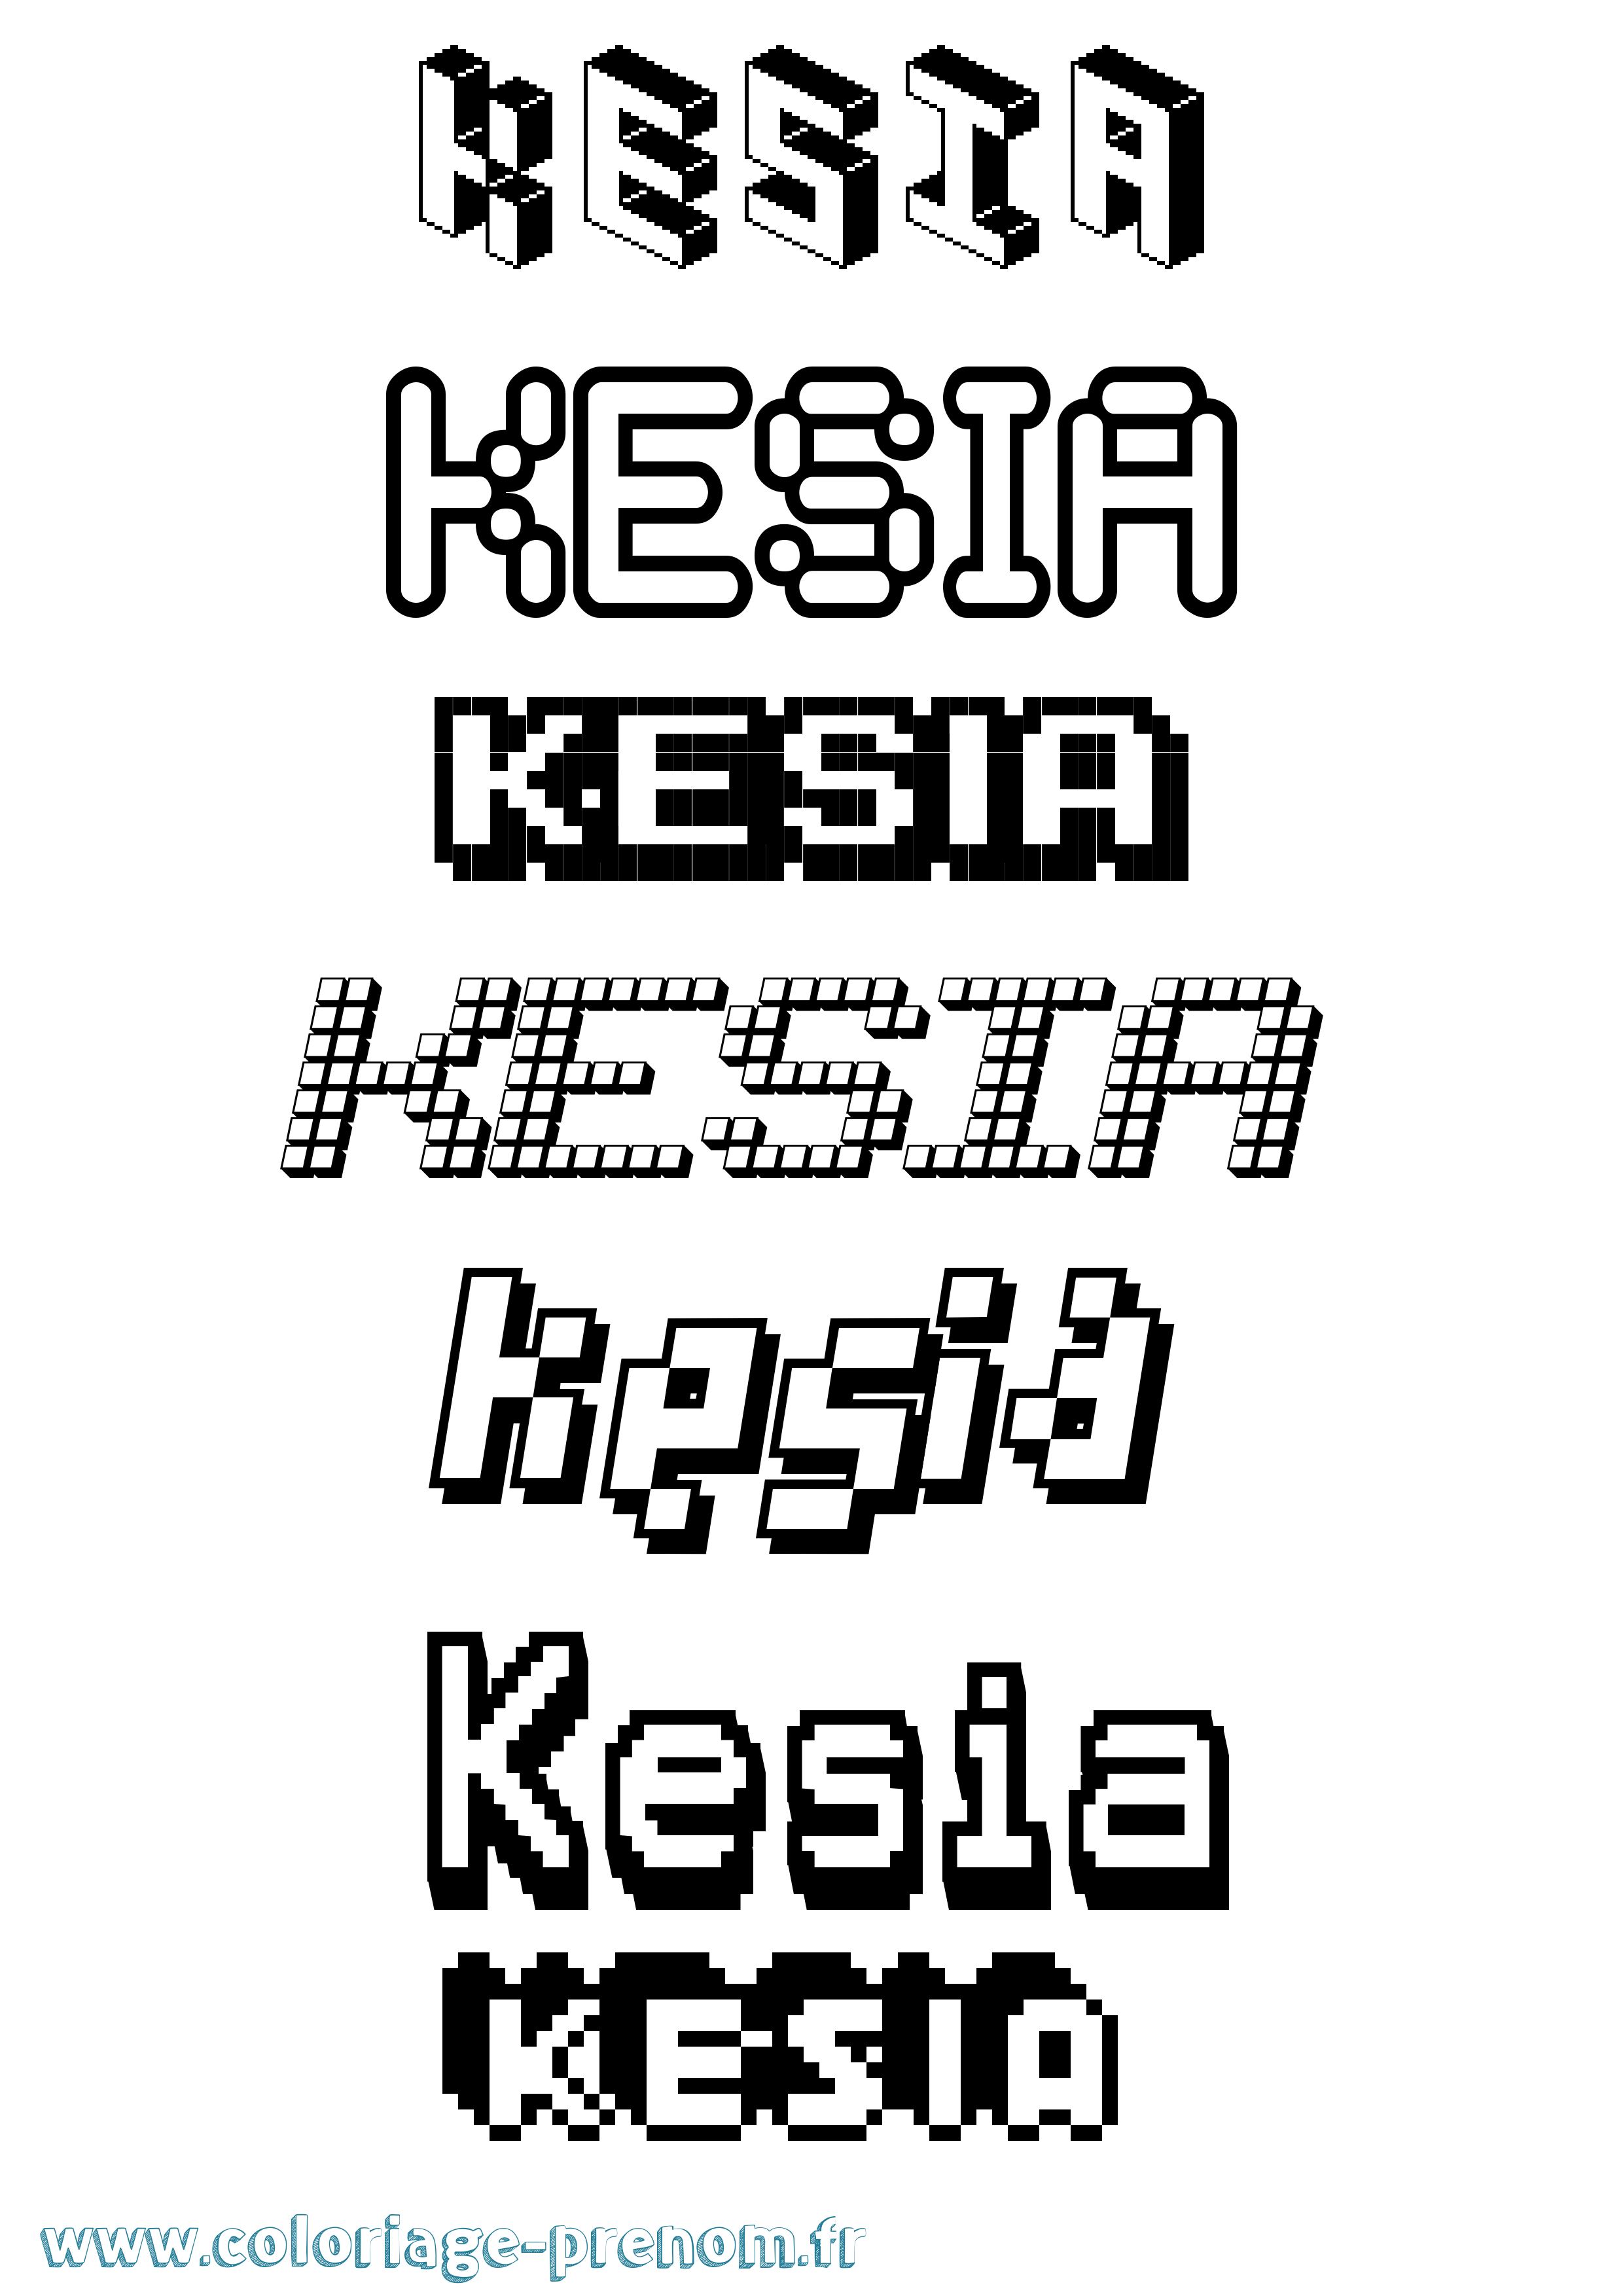 Coloriage prénom Kesia Pixel